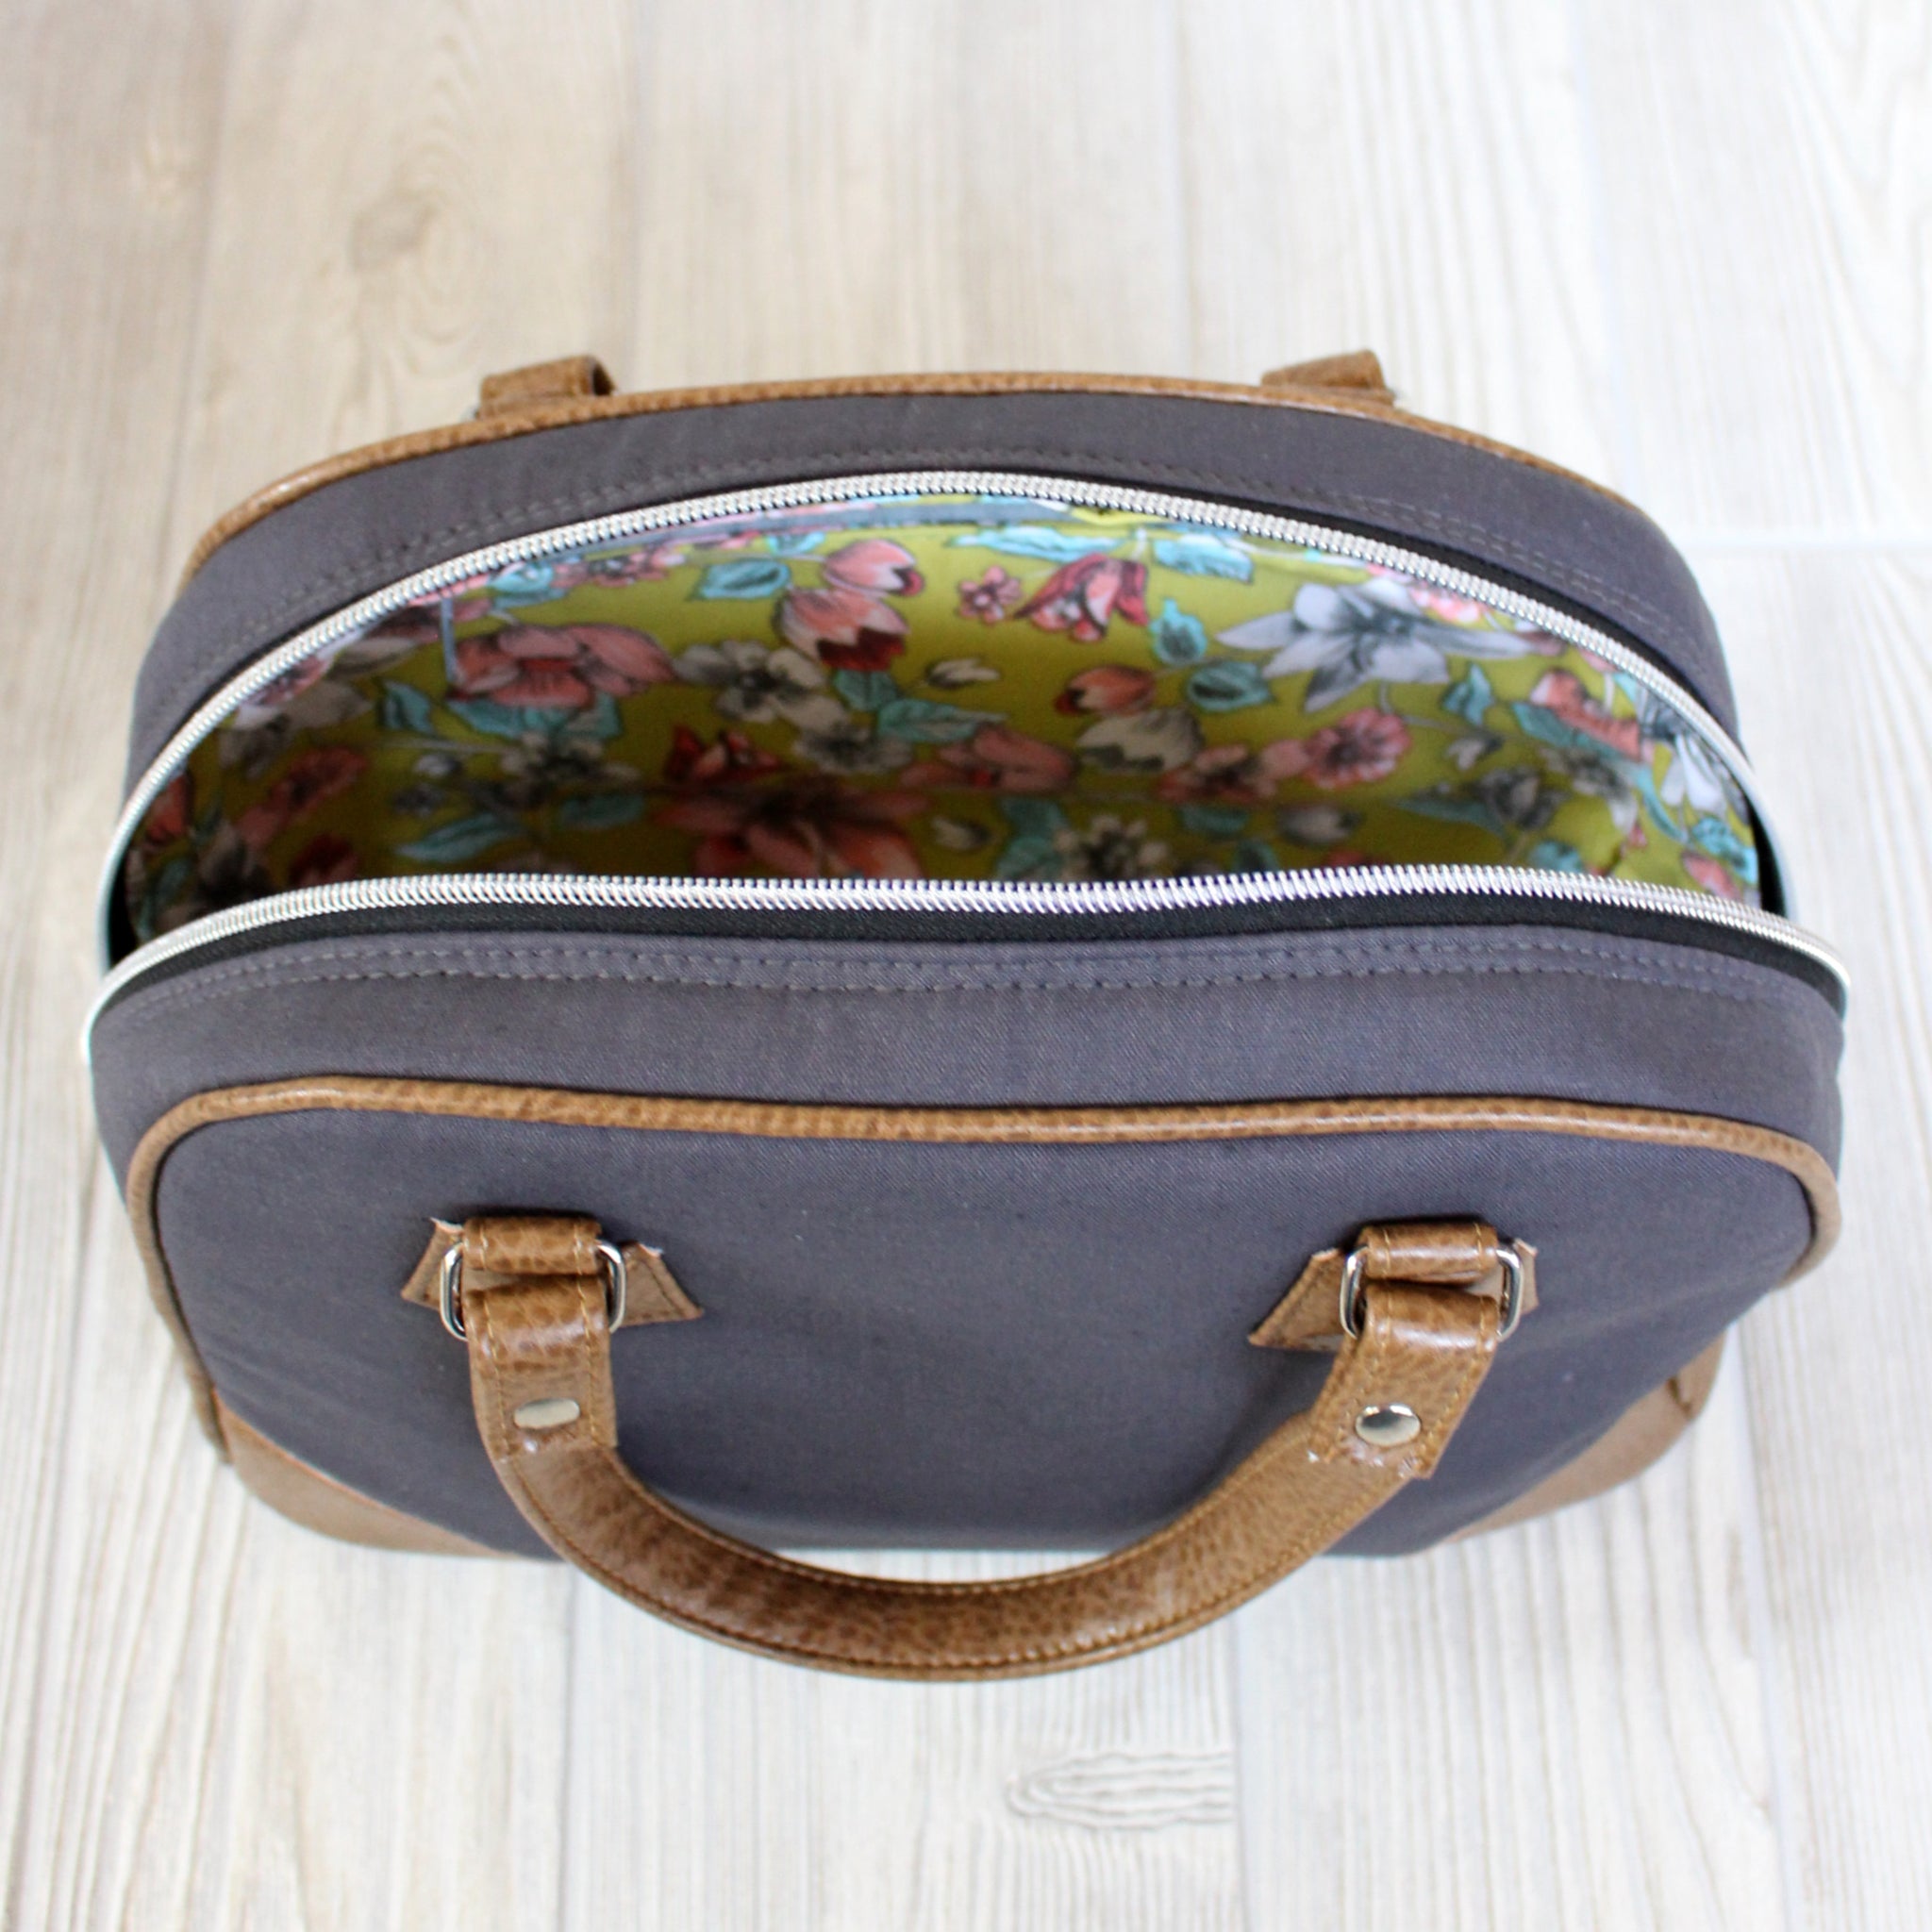 U-Handbag: Lisa Lam Jolly Holiday Bowling Bag pattern review by JeannaAnn